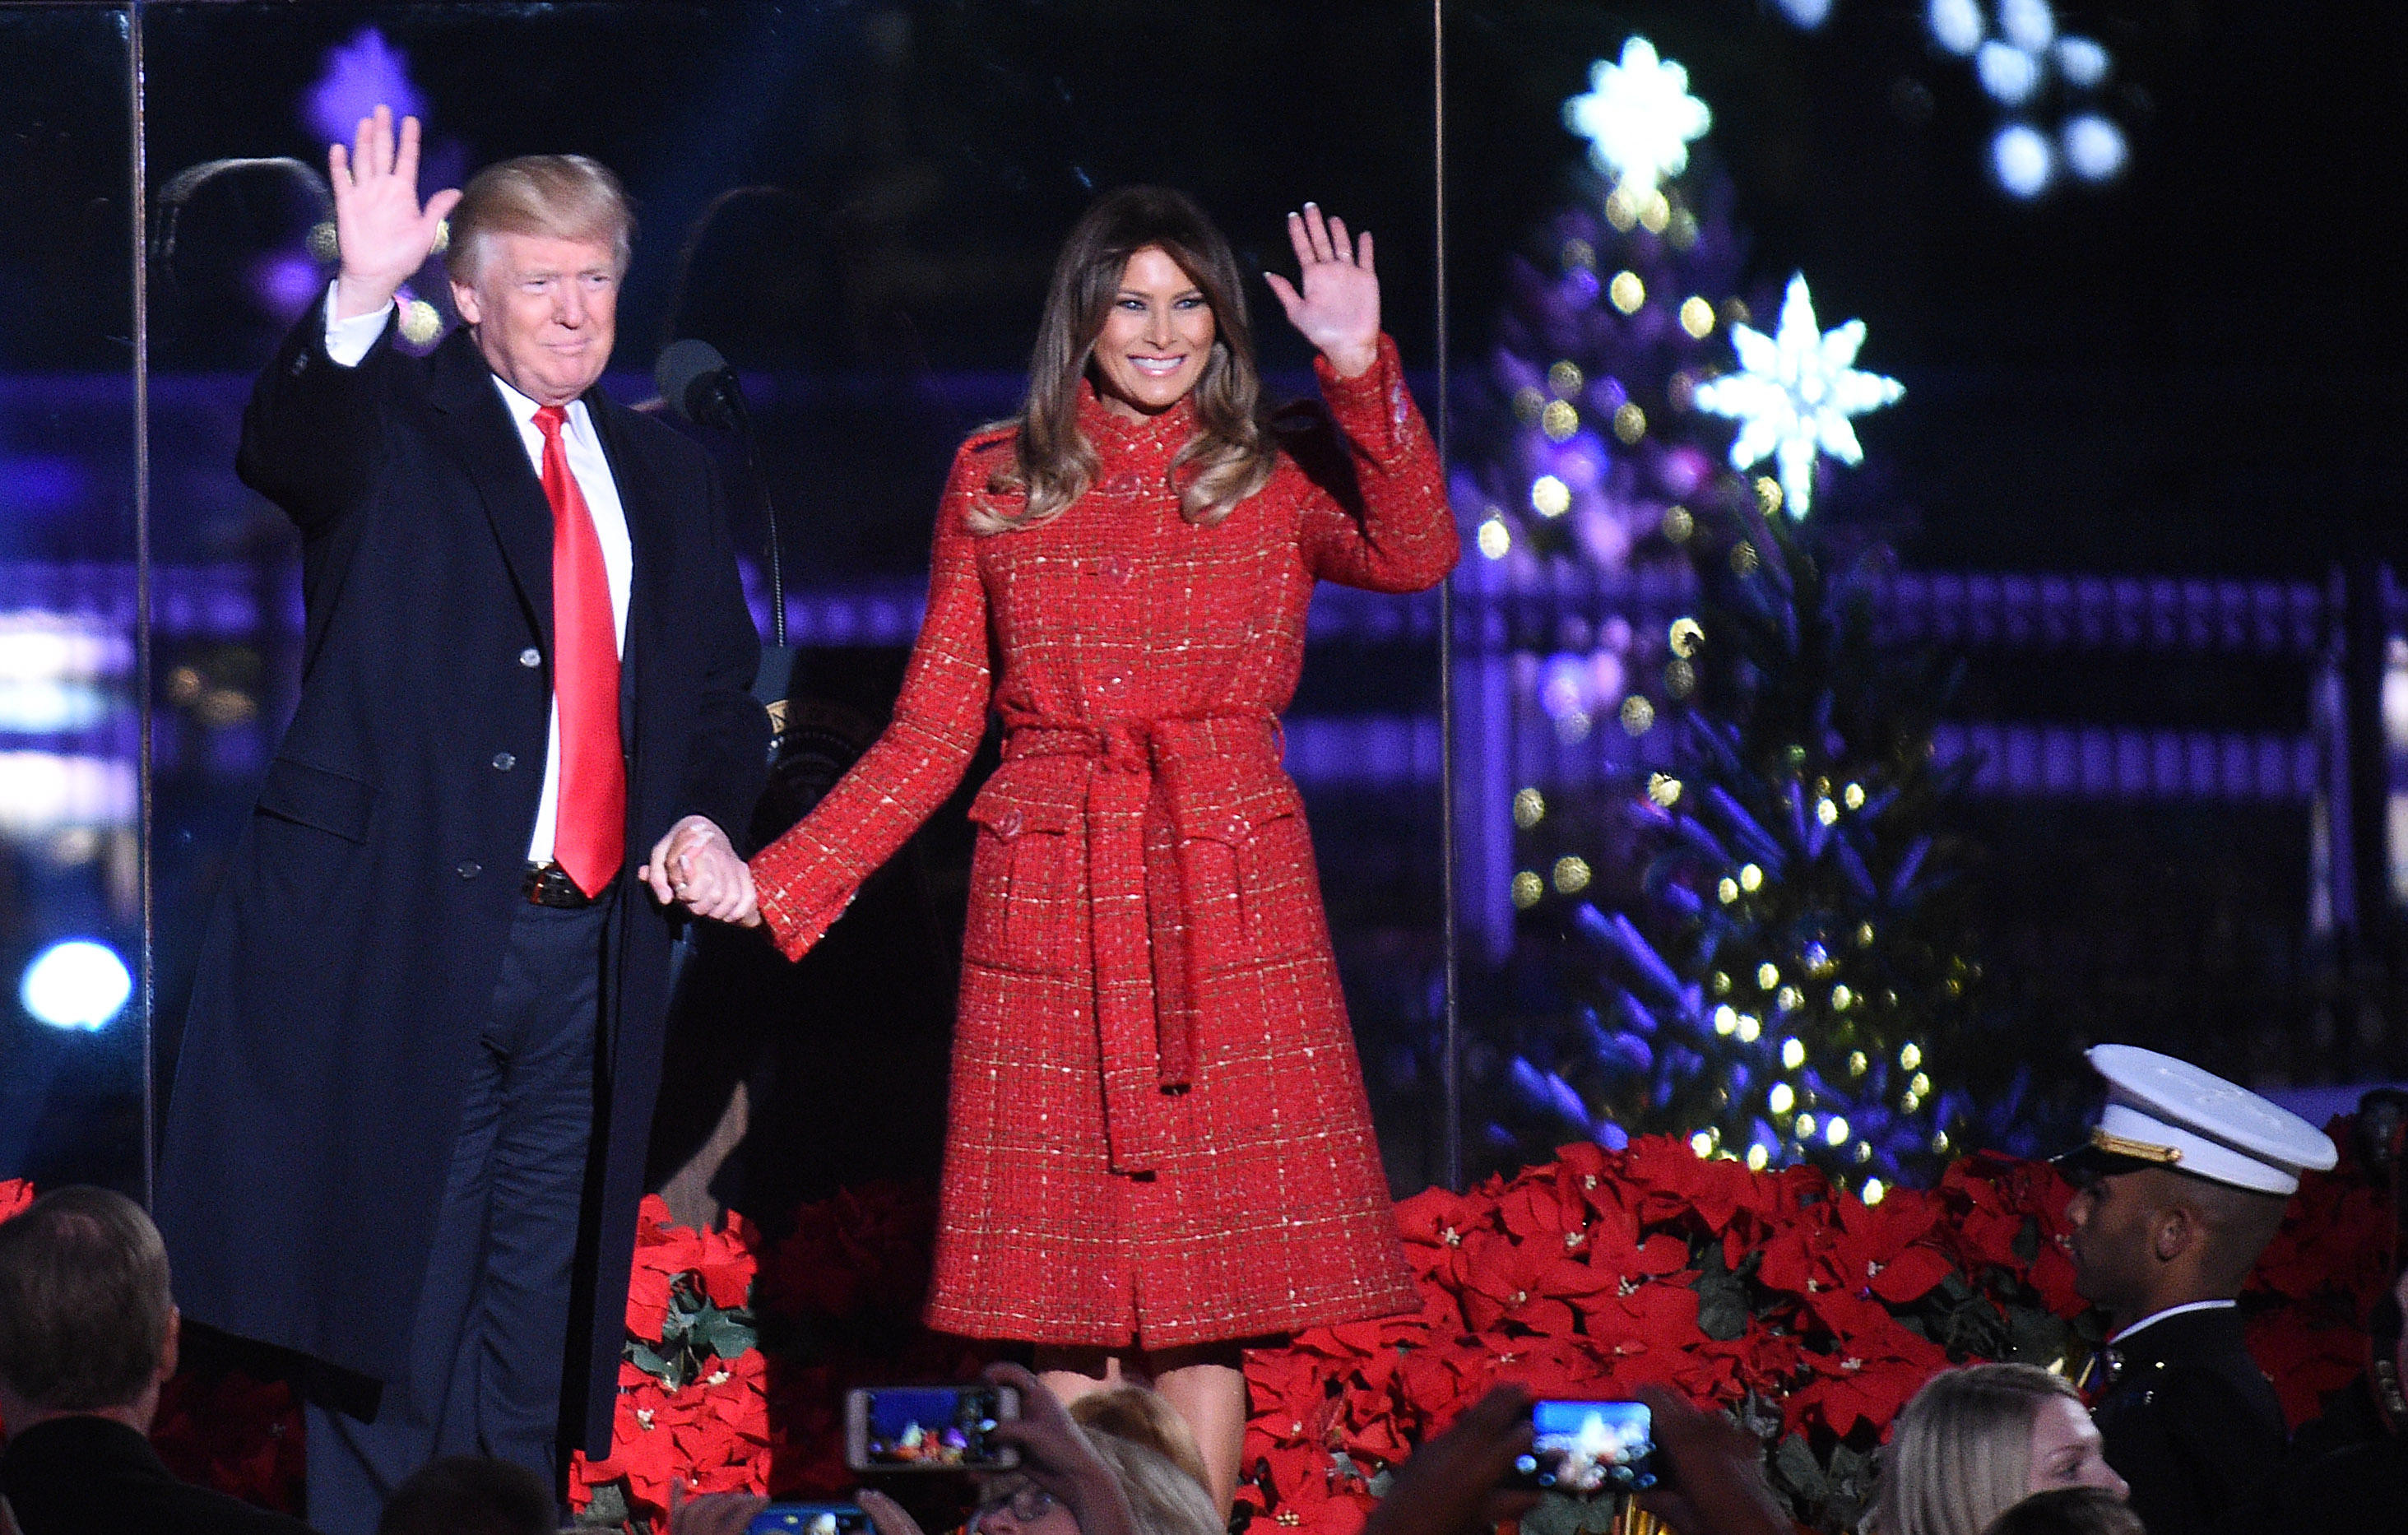 Whitehouse Christmas Tree Lighting 2019
 National Christmas Tree lighting Watch live as President